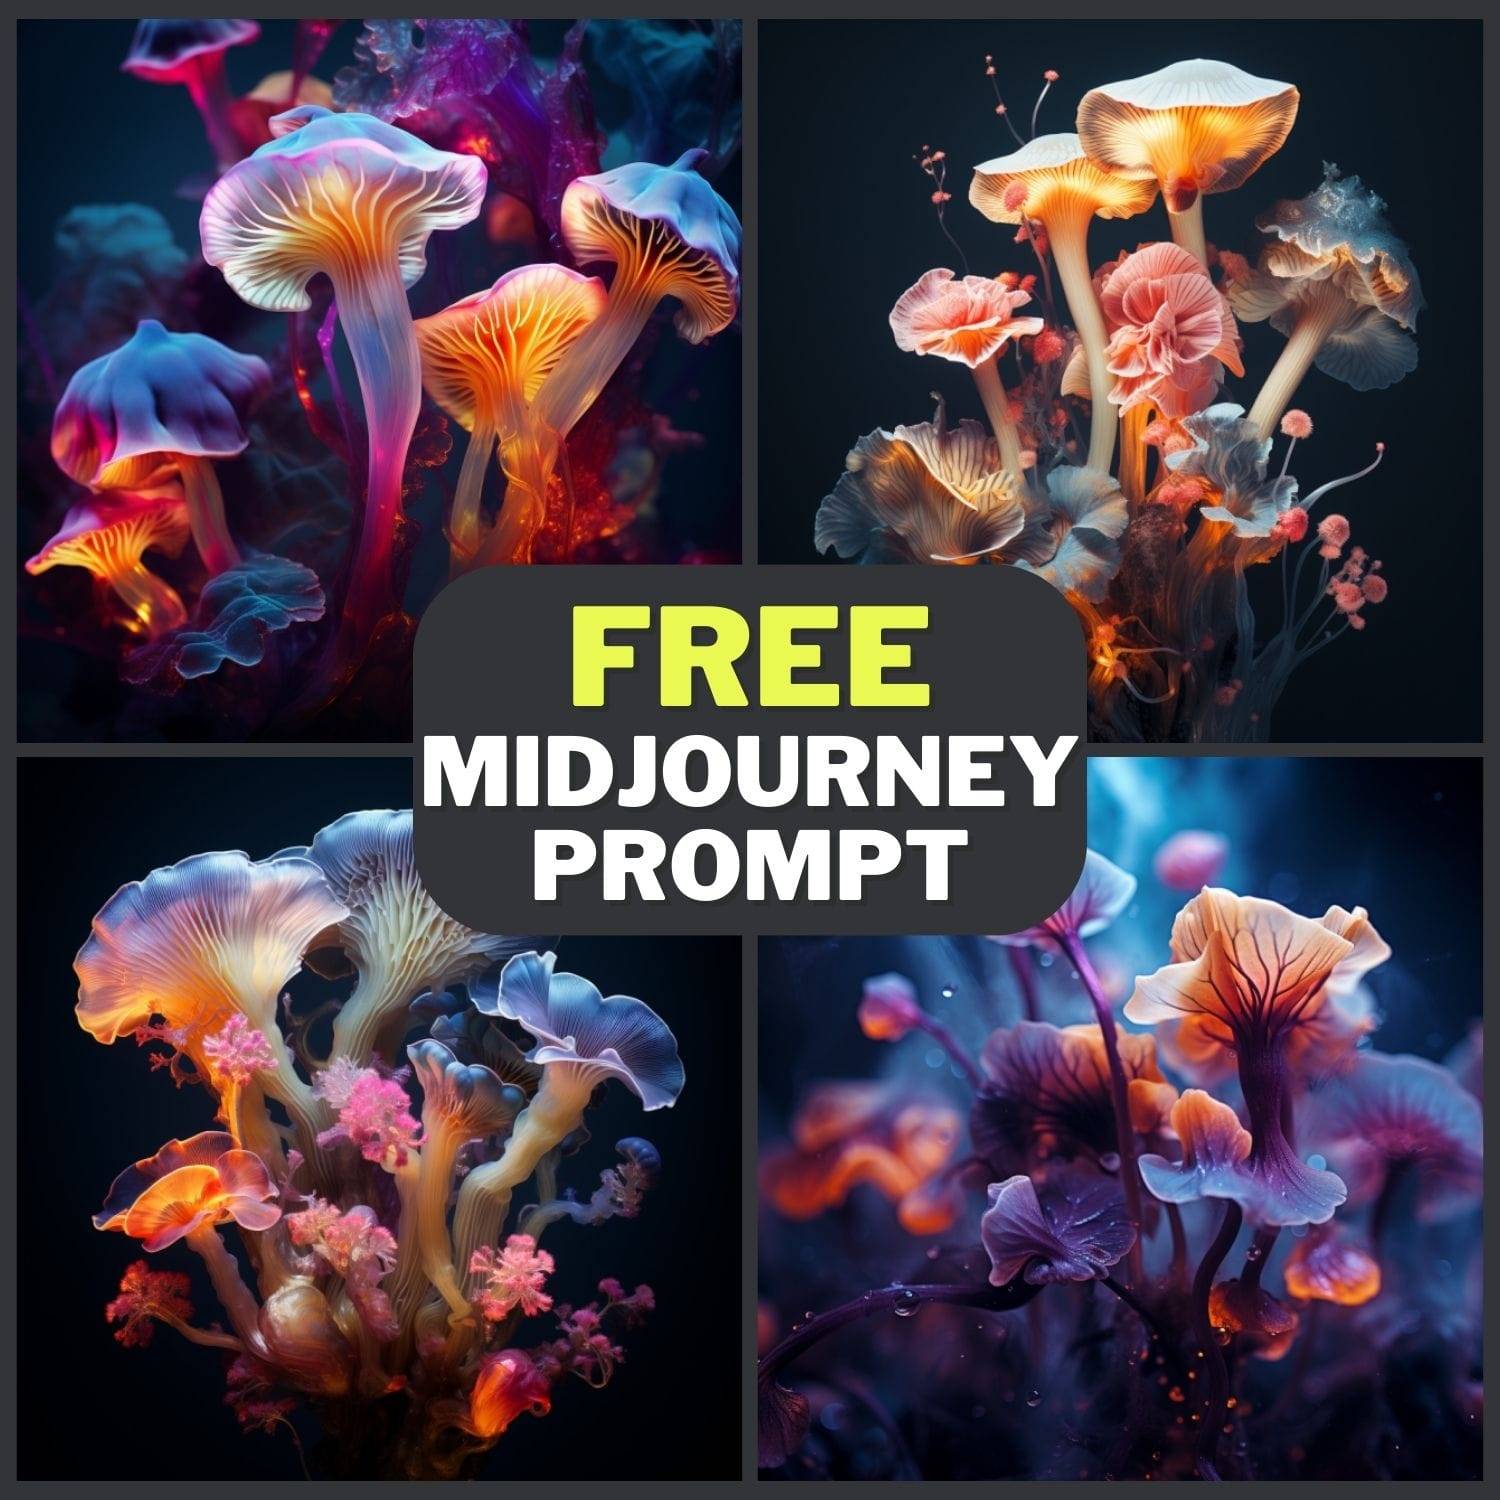 Backlit Mushrooms and Flowers Free Midjourney Prompt 1